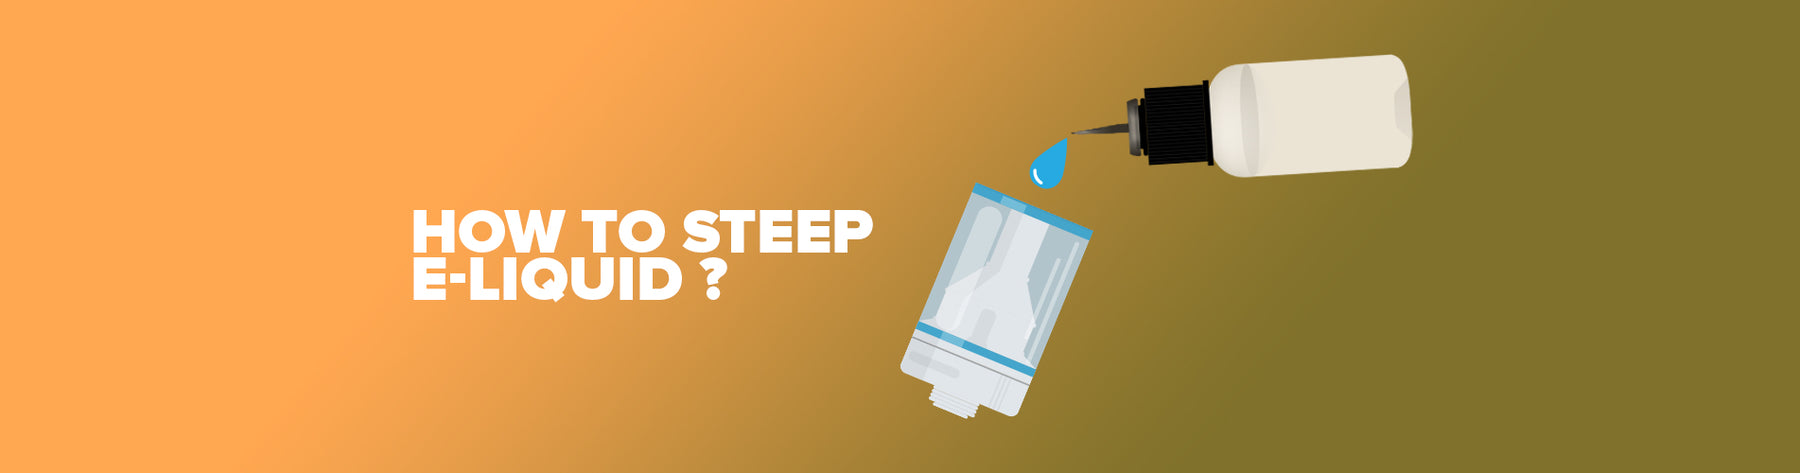 How to Steep E-Liquid?